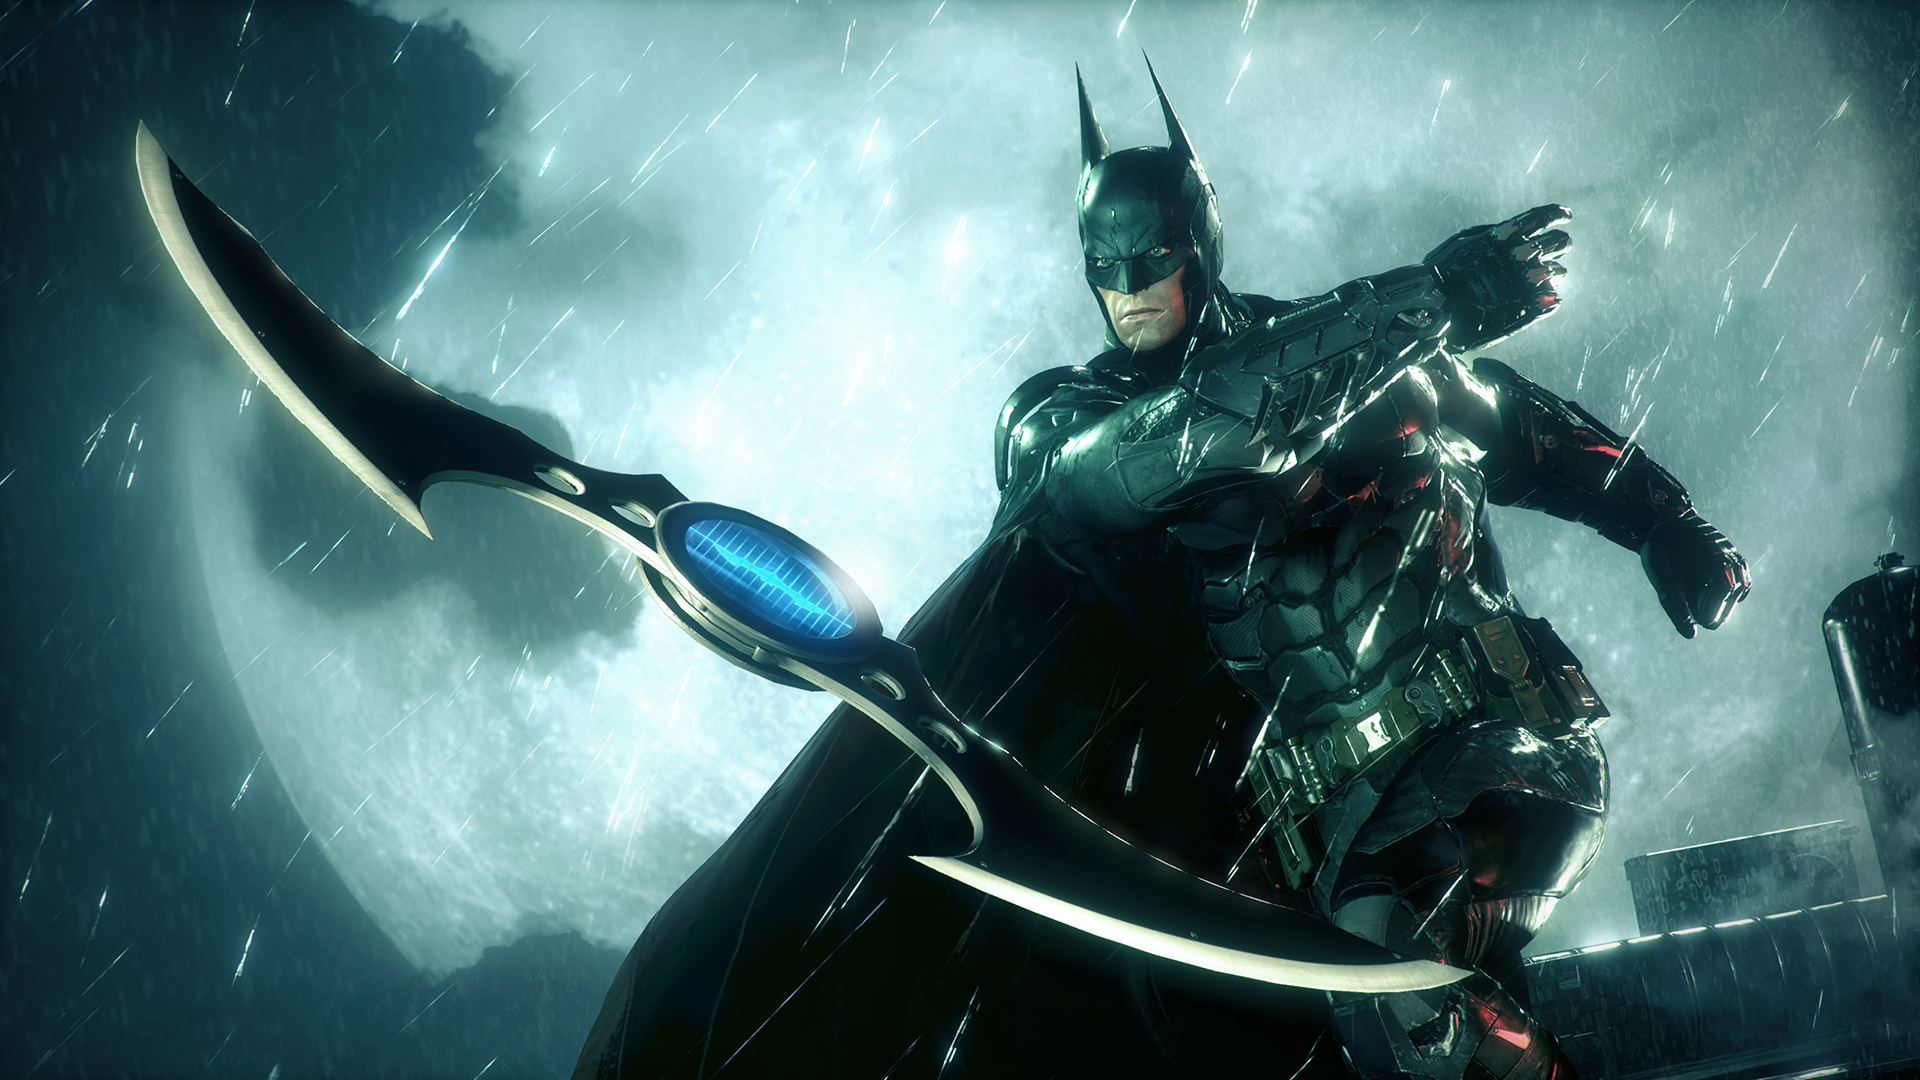 Batman Arkham Knight delayed again but don't panic | GamesRadar+